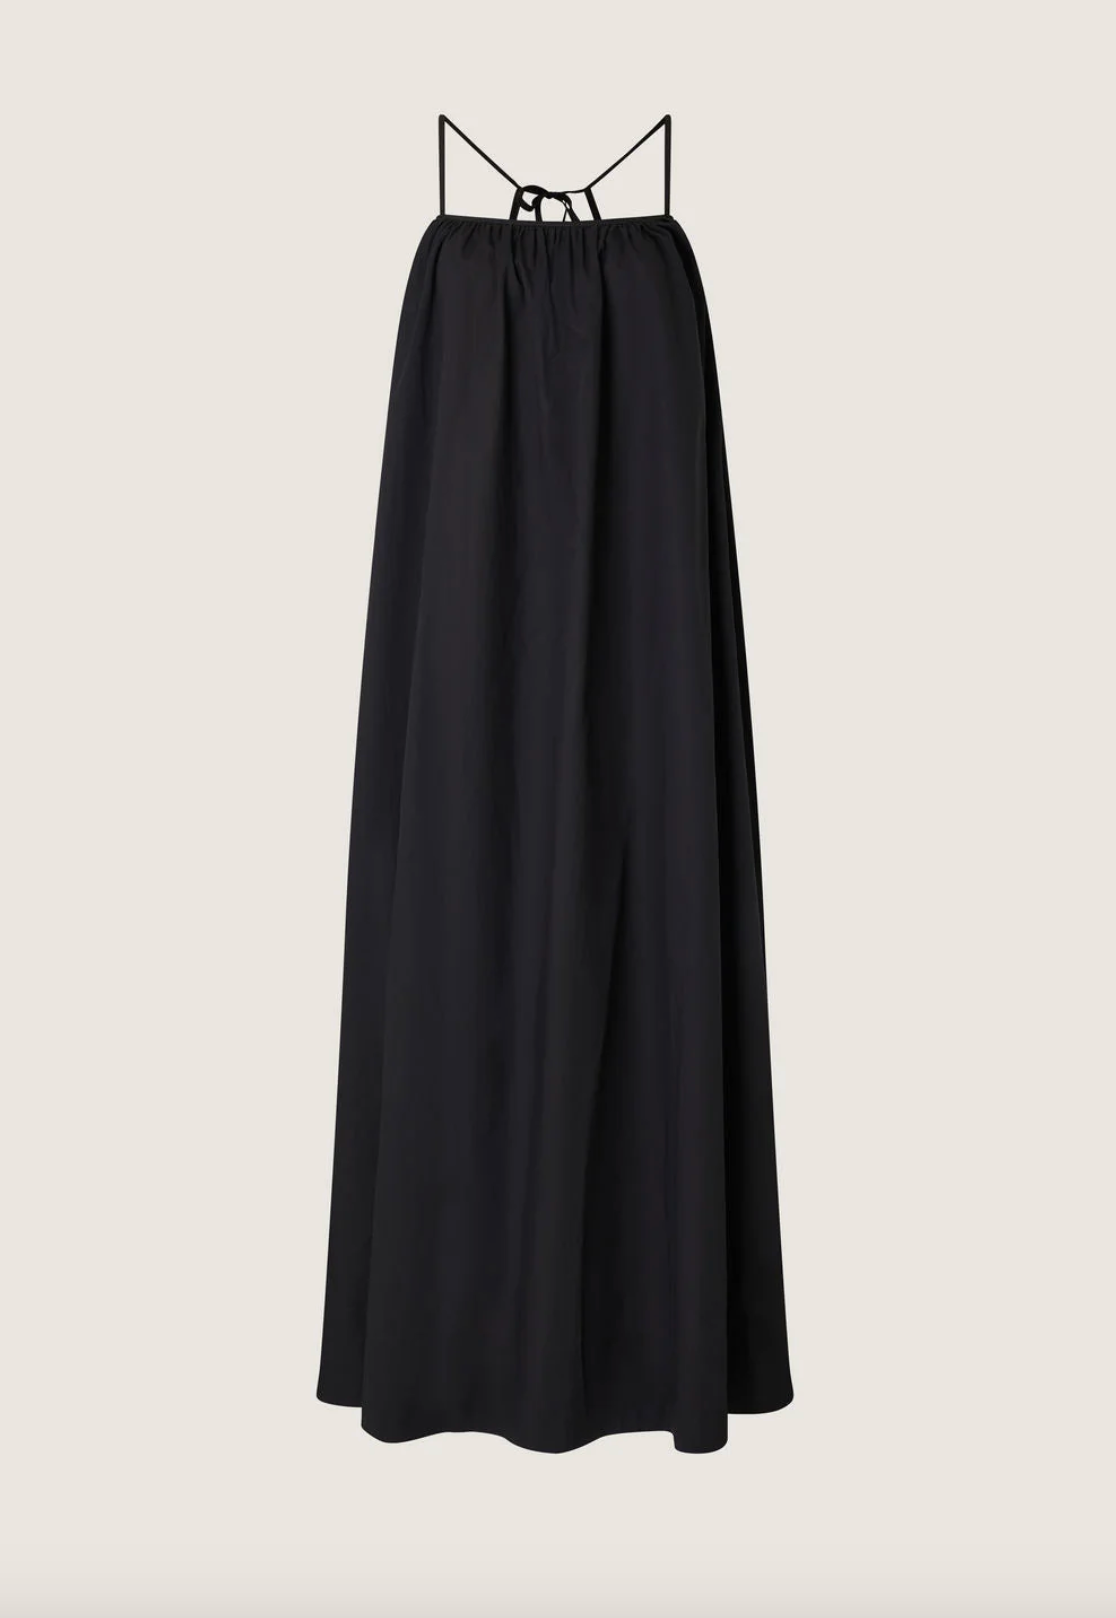 Soeur - Arielle Black Maxi Dress - Image 6 of 7